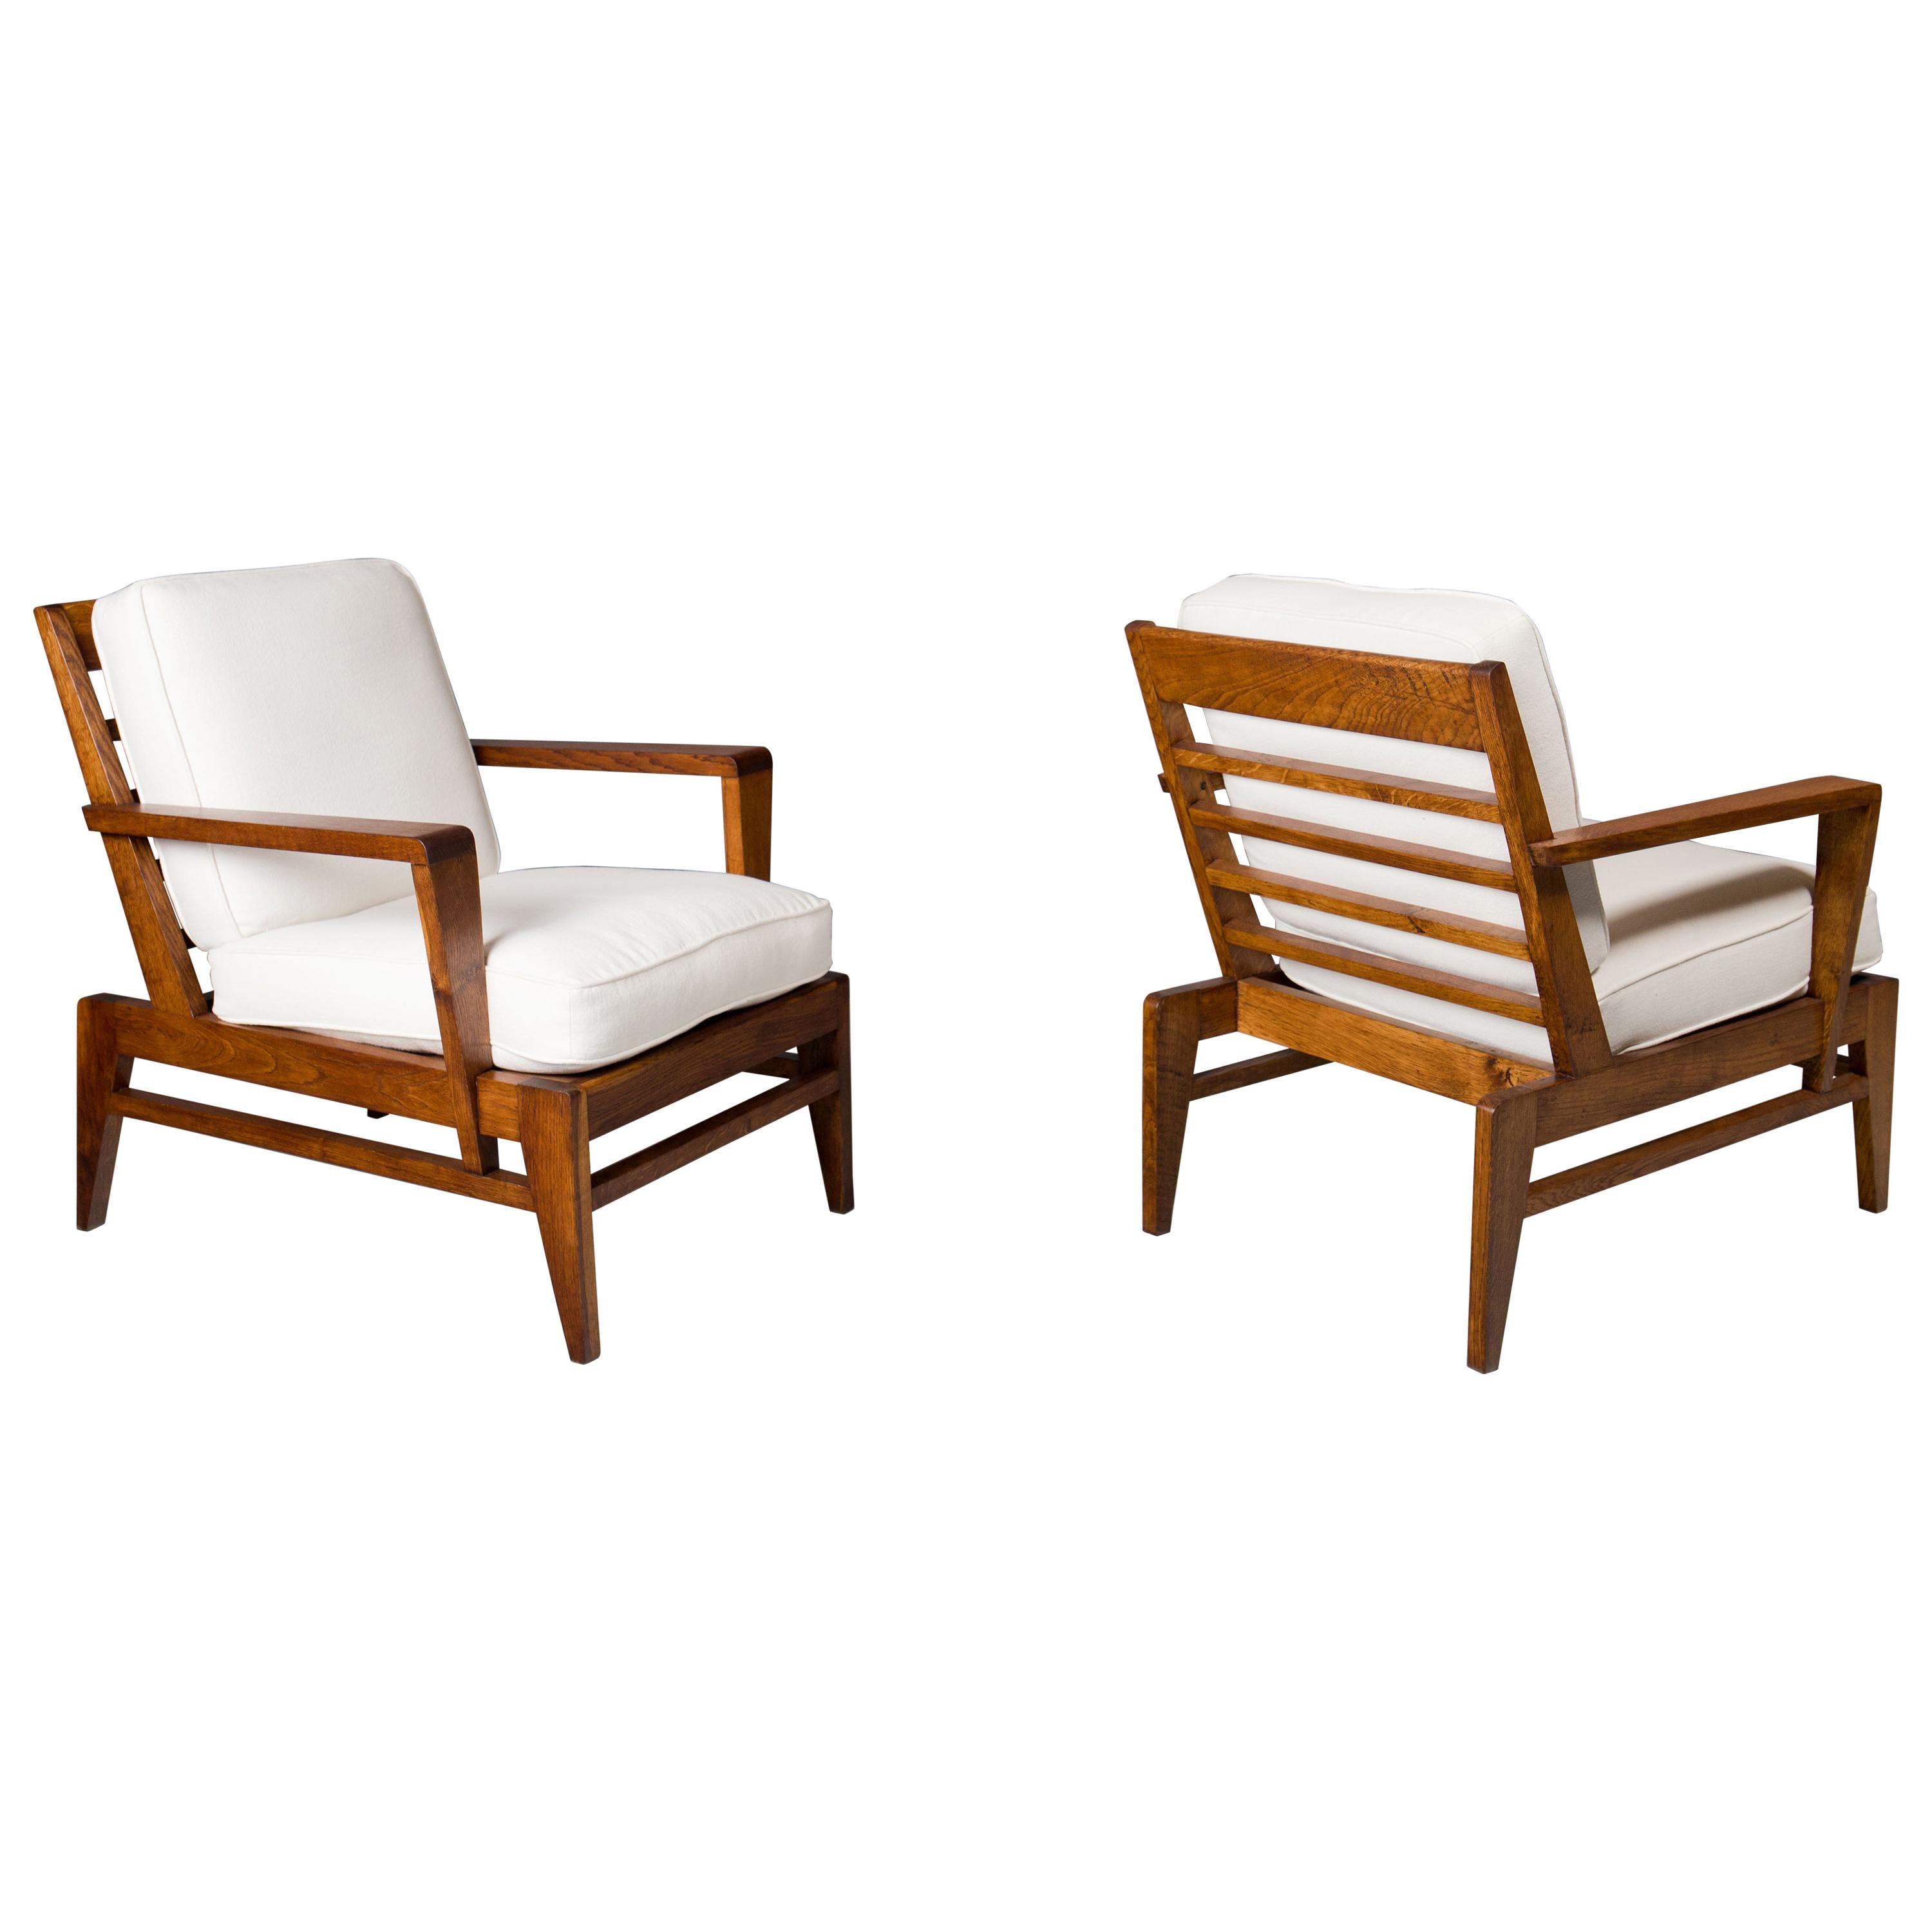 Pair of René Gabriel Lounge Chairs, France, 1950s